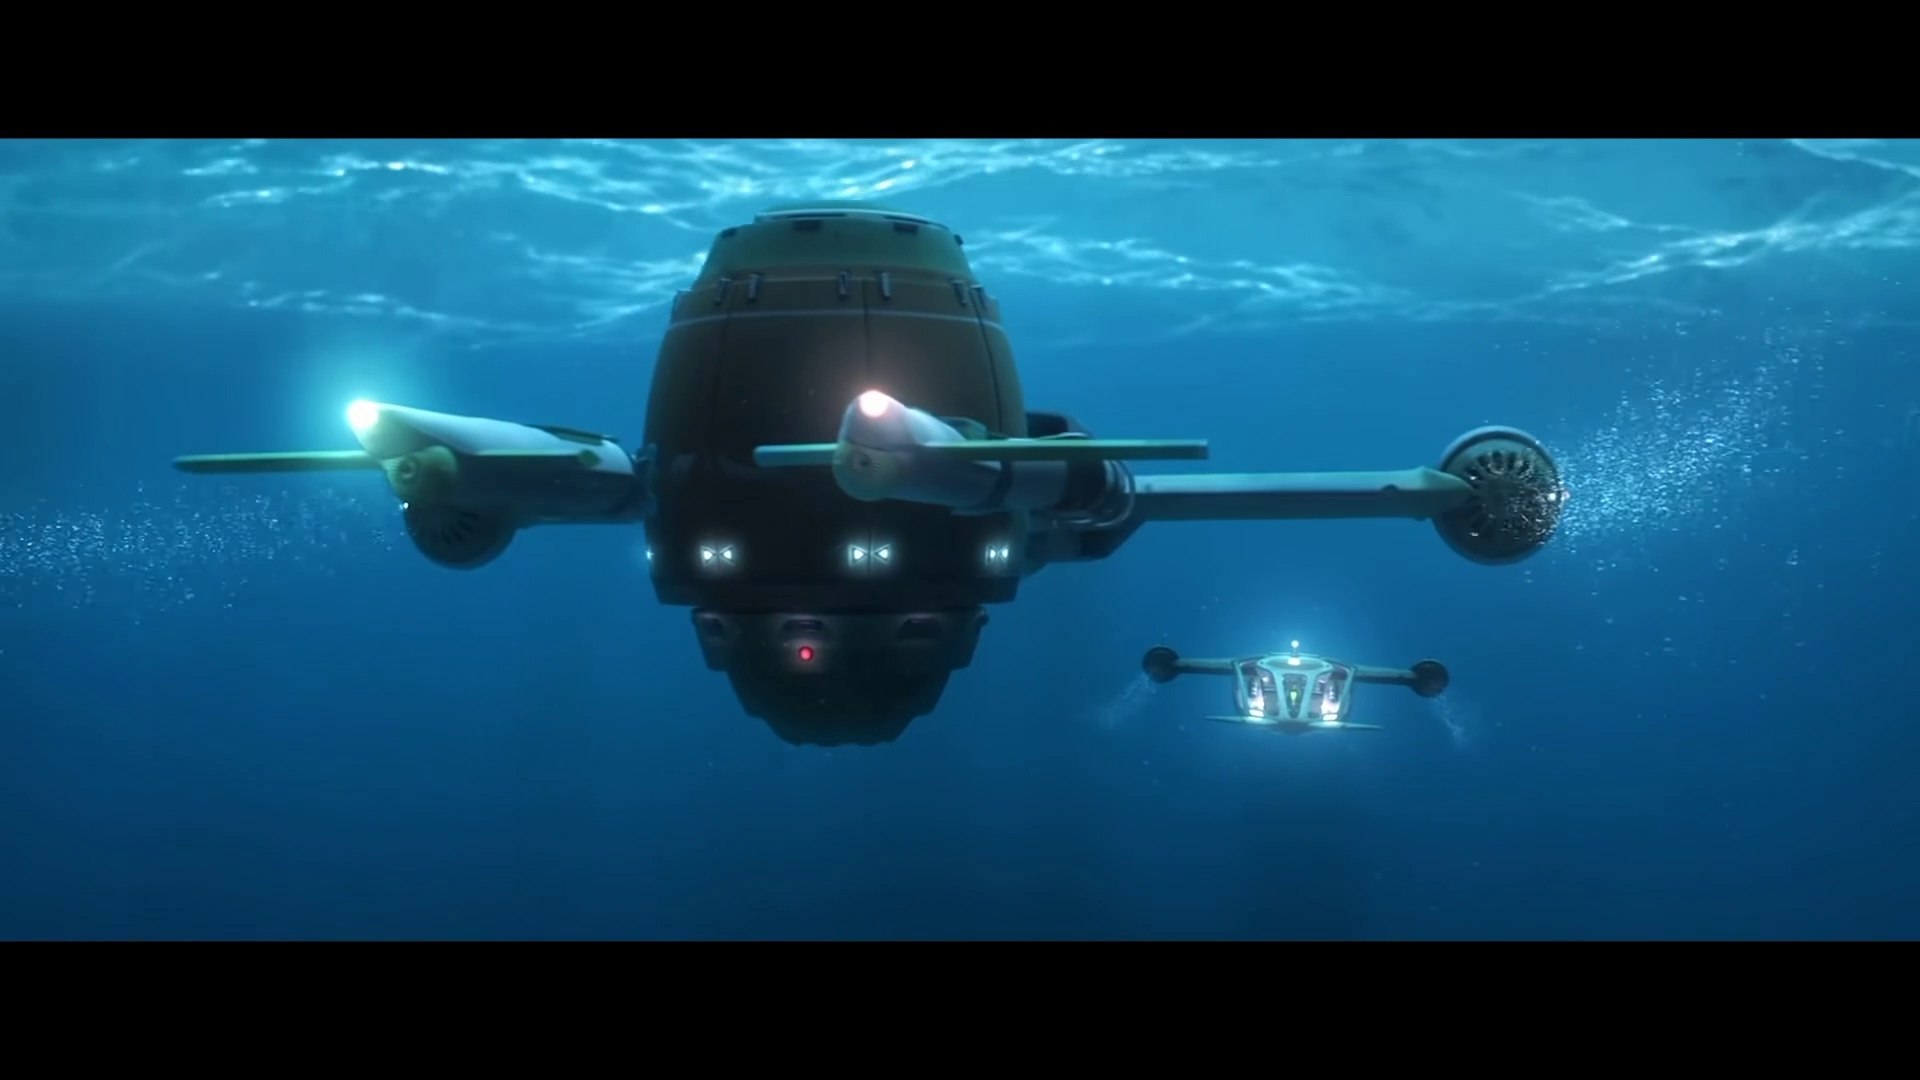 Sci-Fi Short Film: "Oceanus" Starring Sharif Atkins, Bruce Davison, Megan Dodds | NC Movie